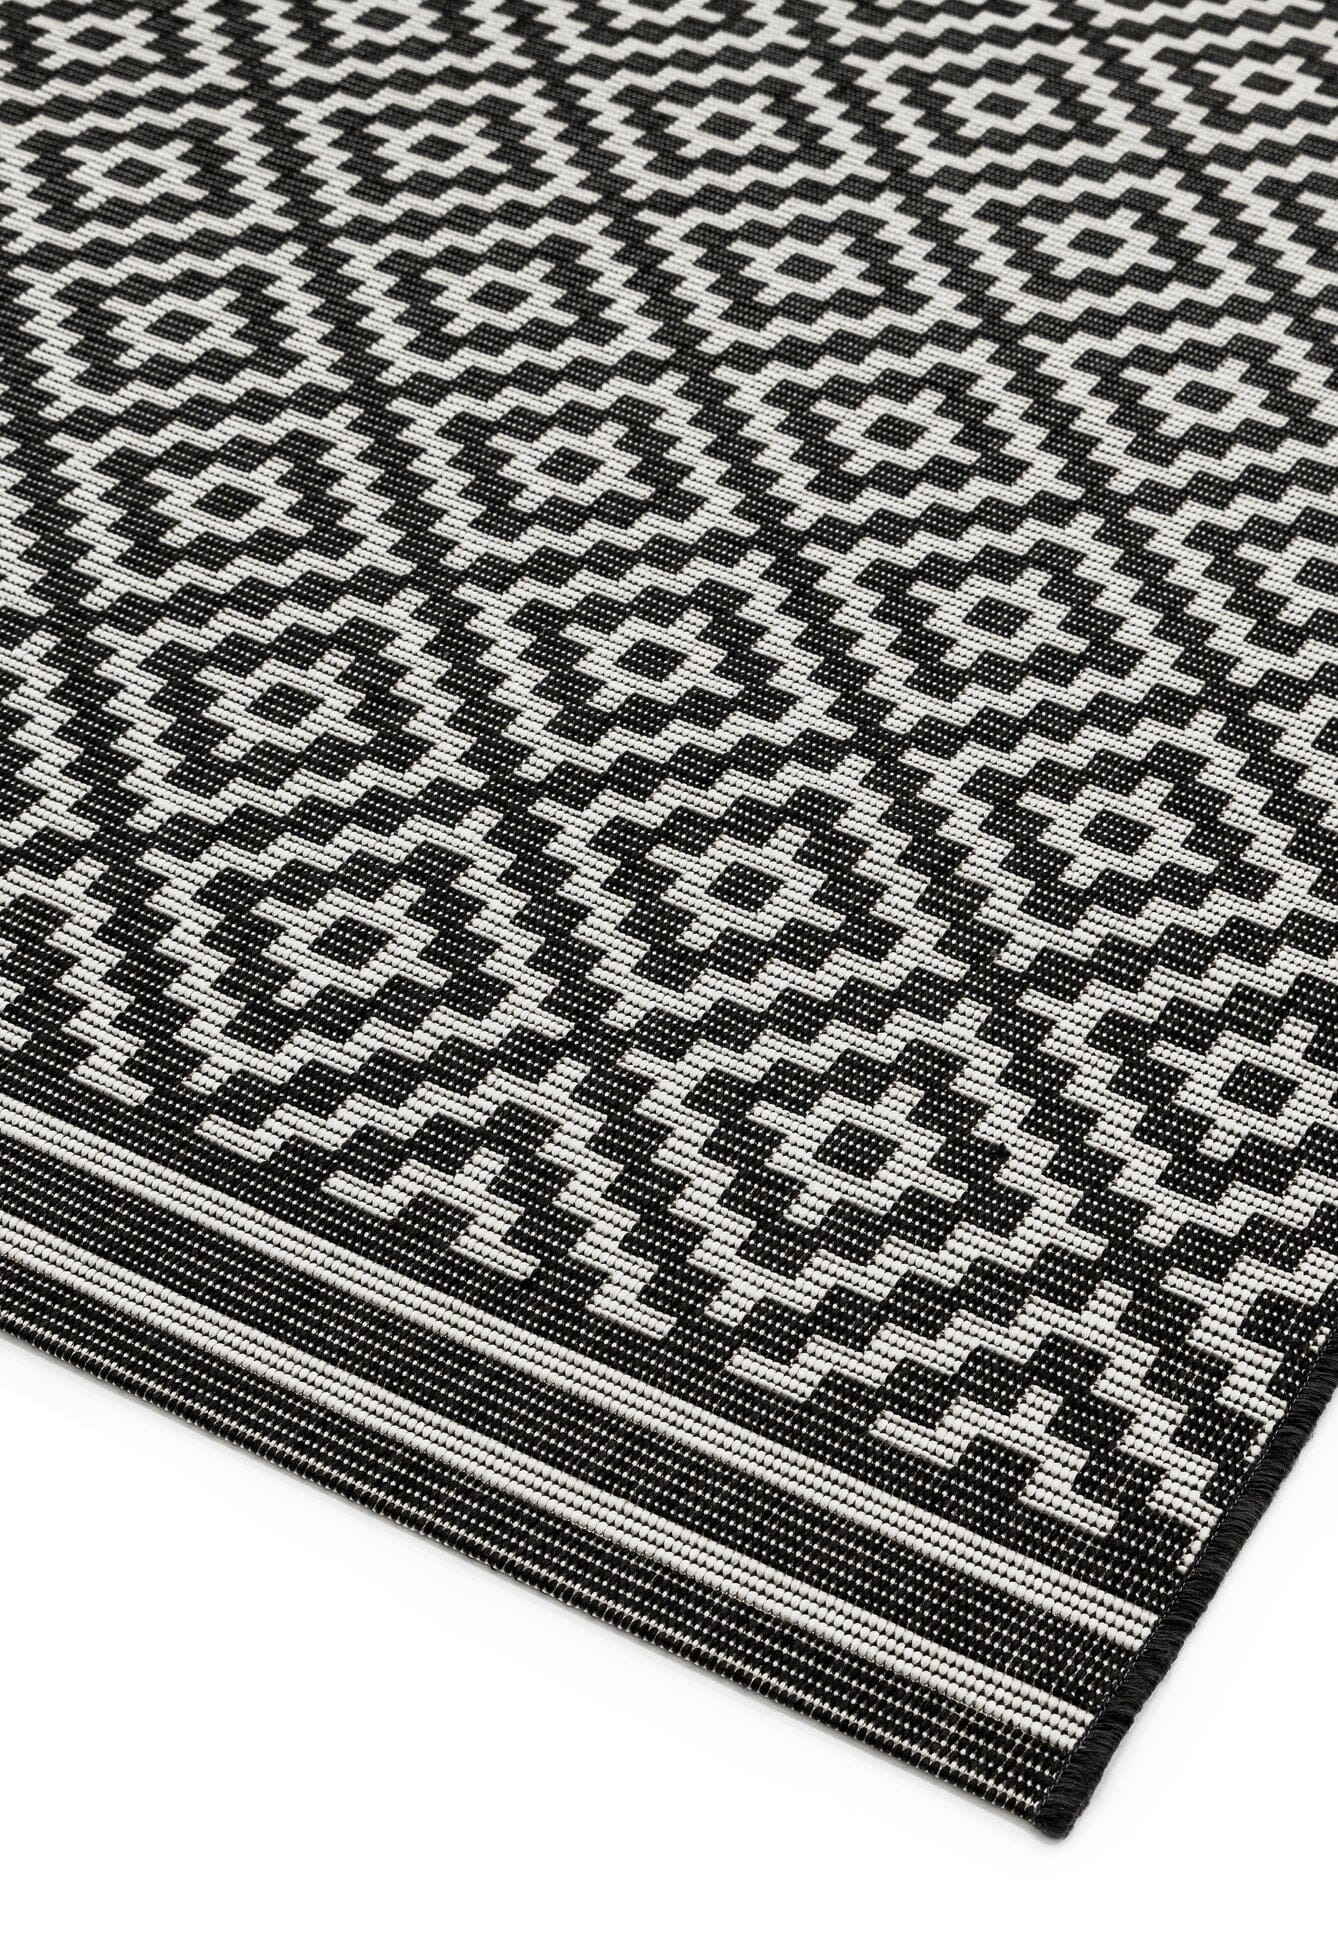 Asiatic Carpets Patio Machine Woven Rug Diamond Mono - 160 x 230cm